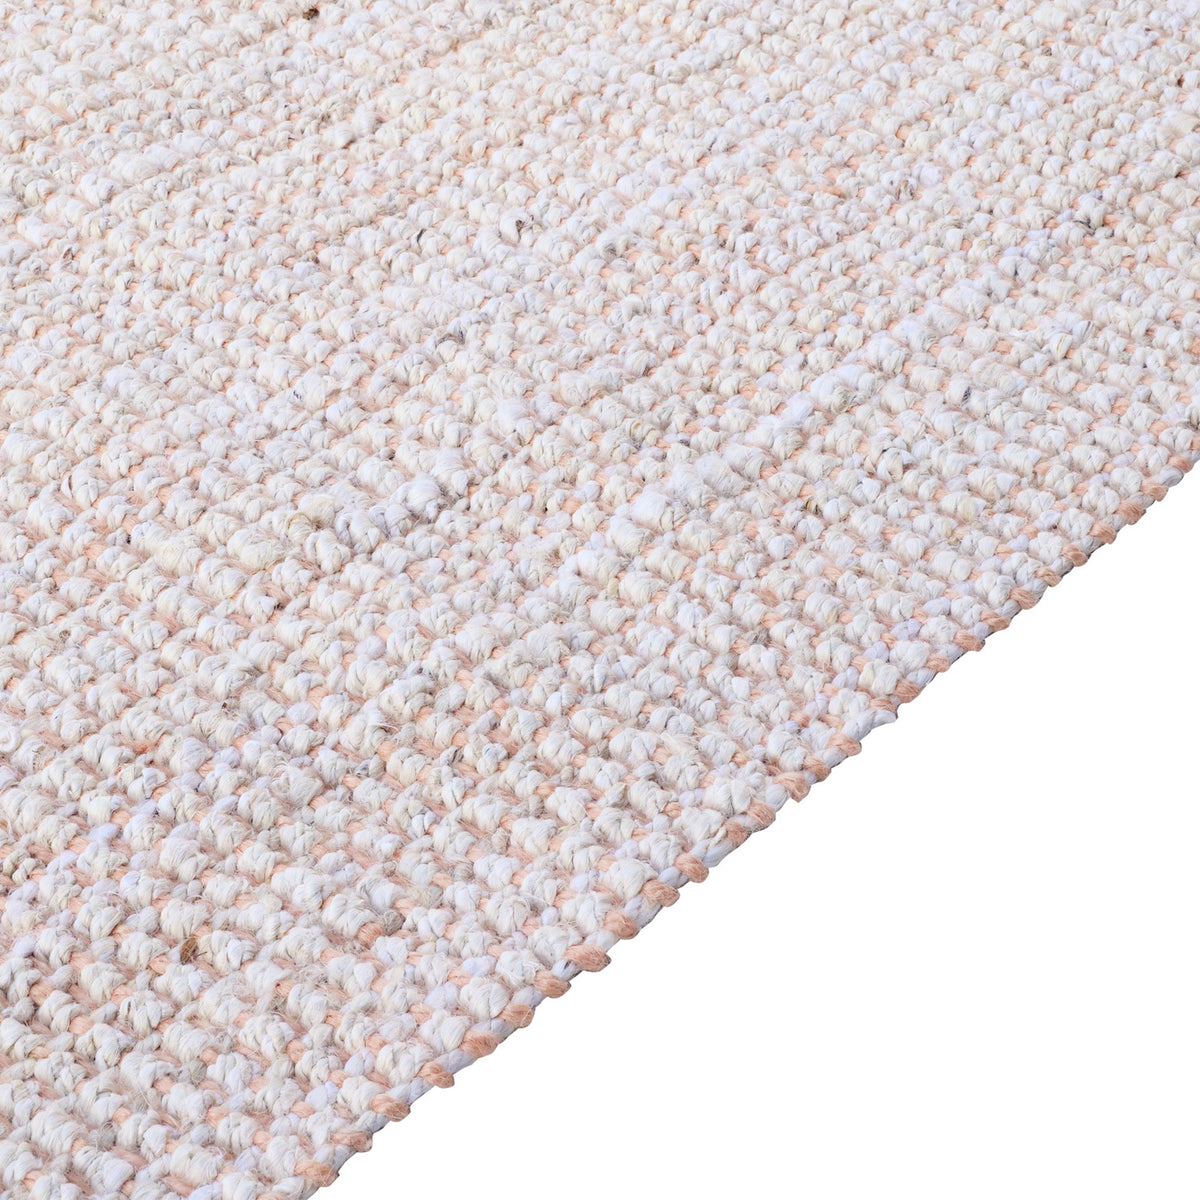 OnlyMat Pink and White Jute Runner Rug Eco-Friendly Handwoven Carpet for Bedside Living Room Decor